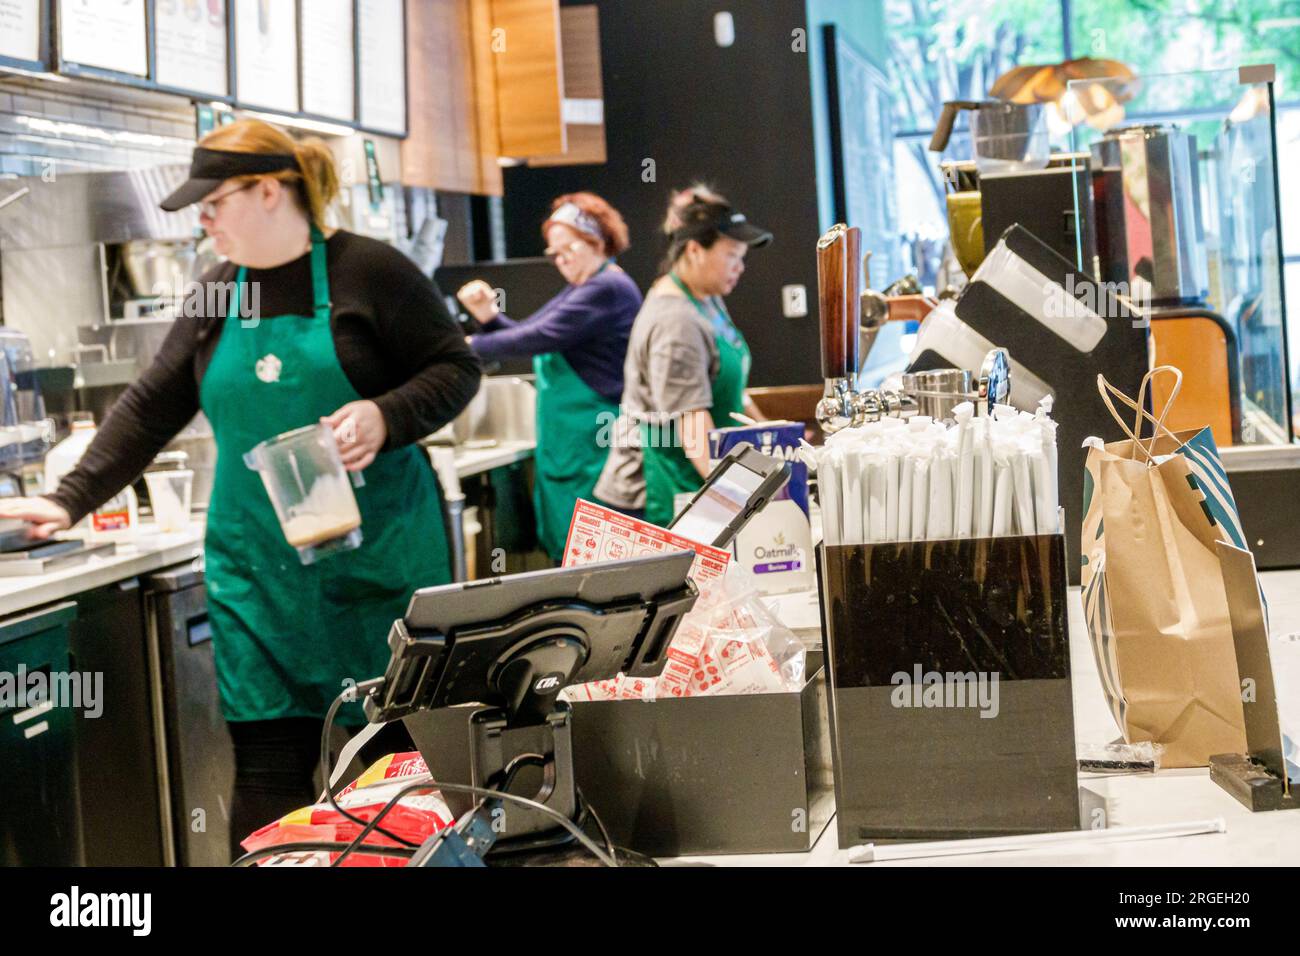 Charlotte North Carolina,Starbucks Coffee,baristas behind counter,woman women lady female,adult,residents,inside interior indoors,employee worker work Stock Photo